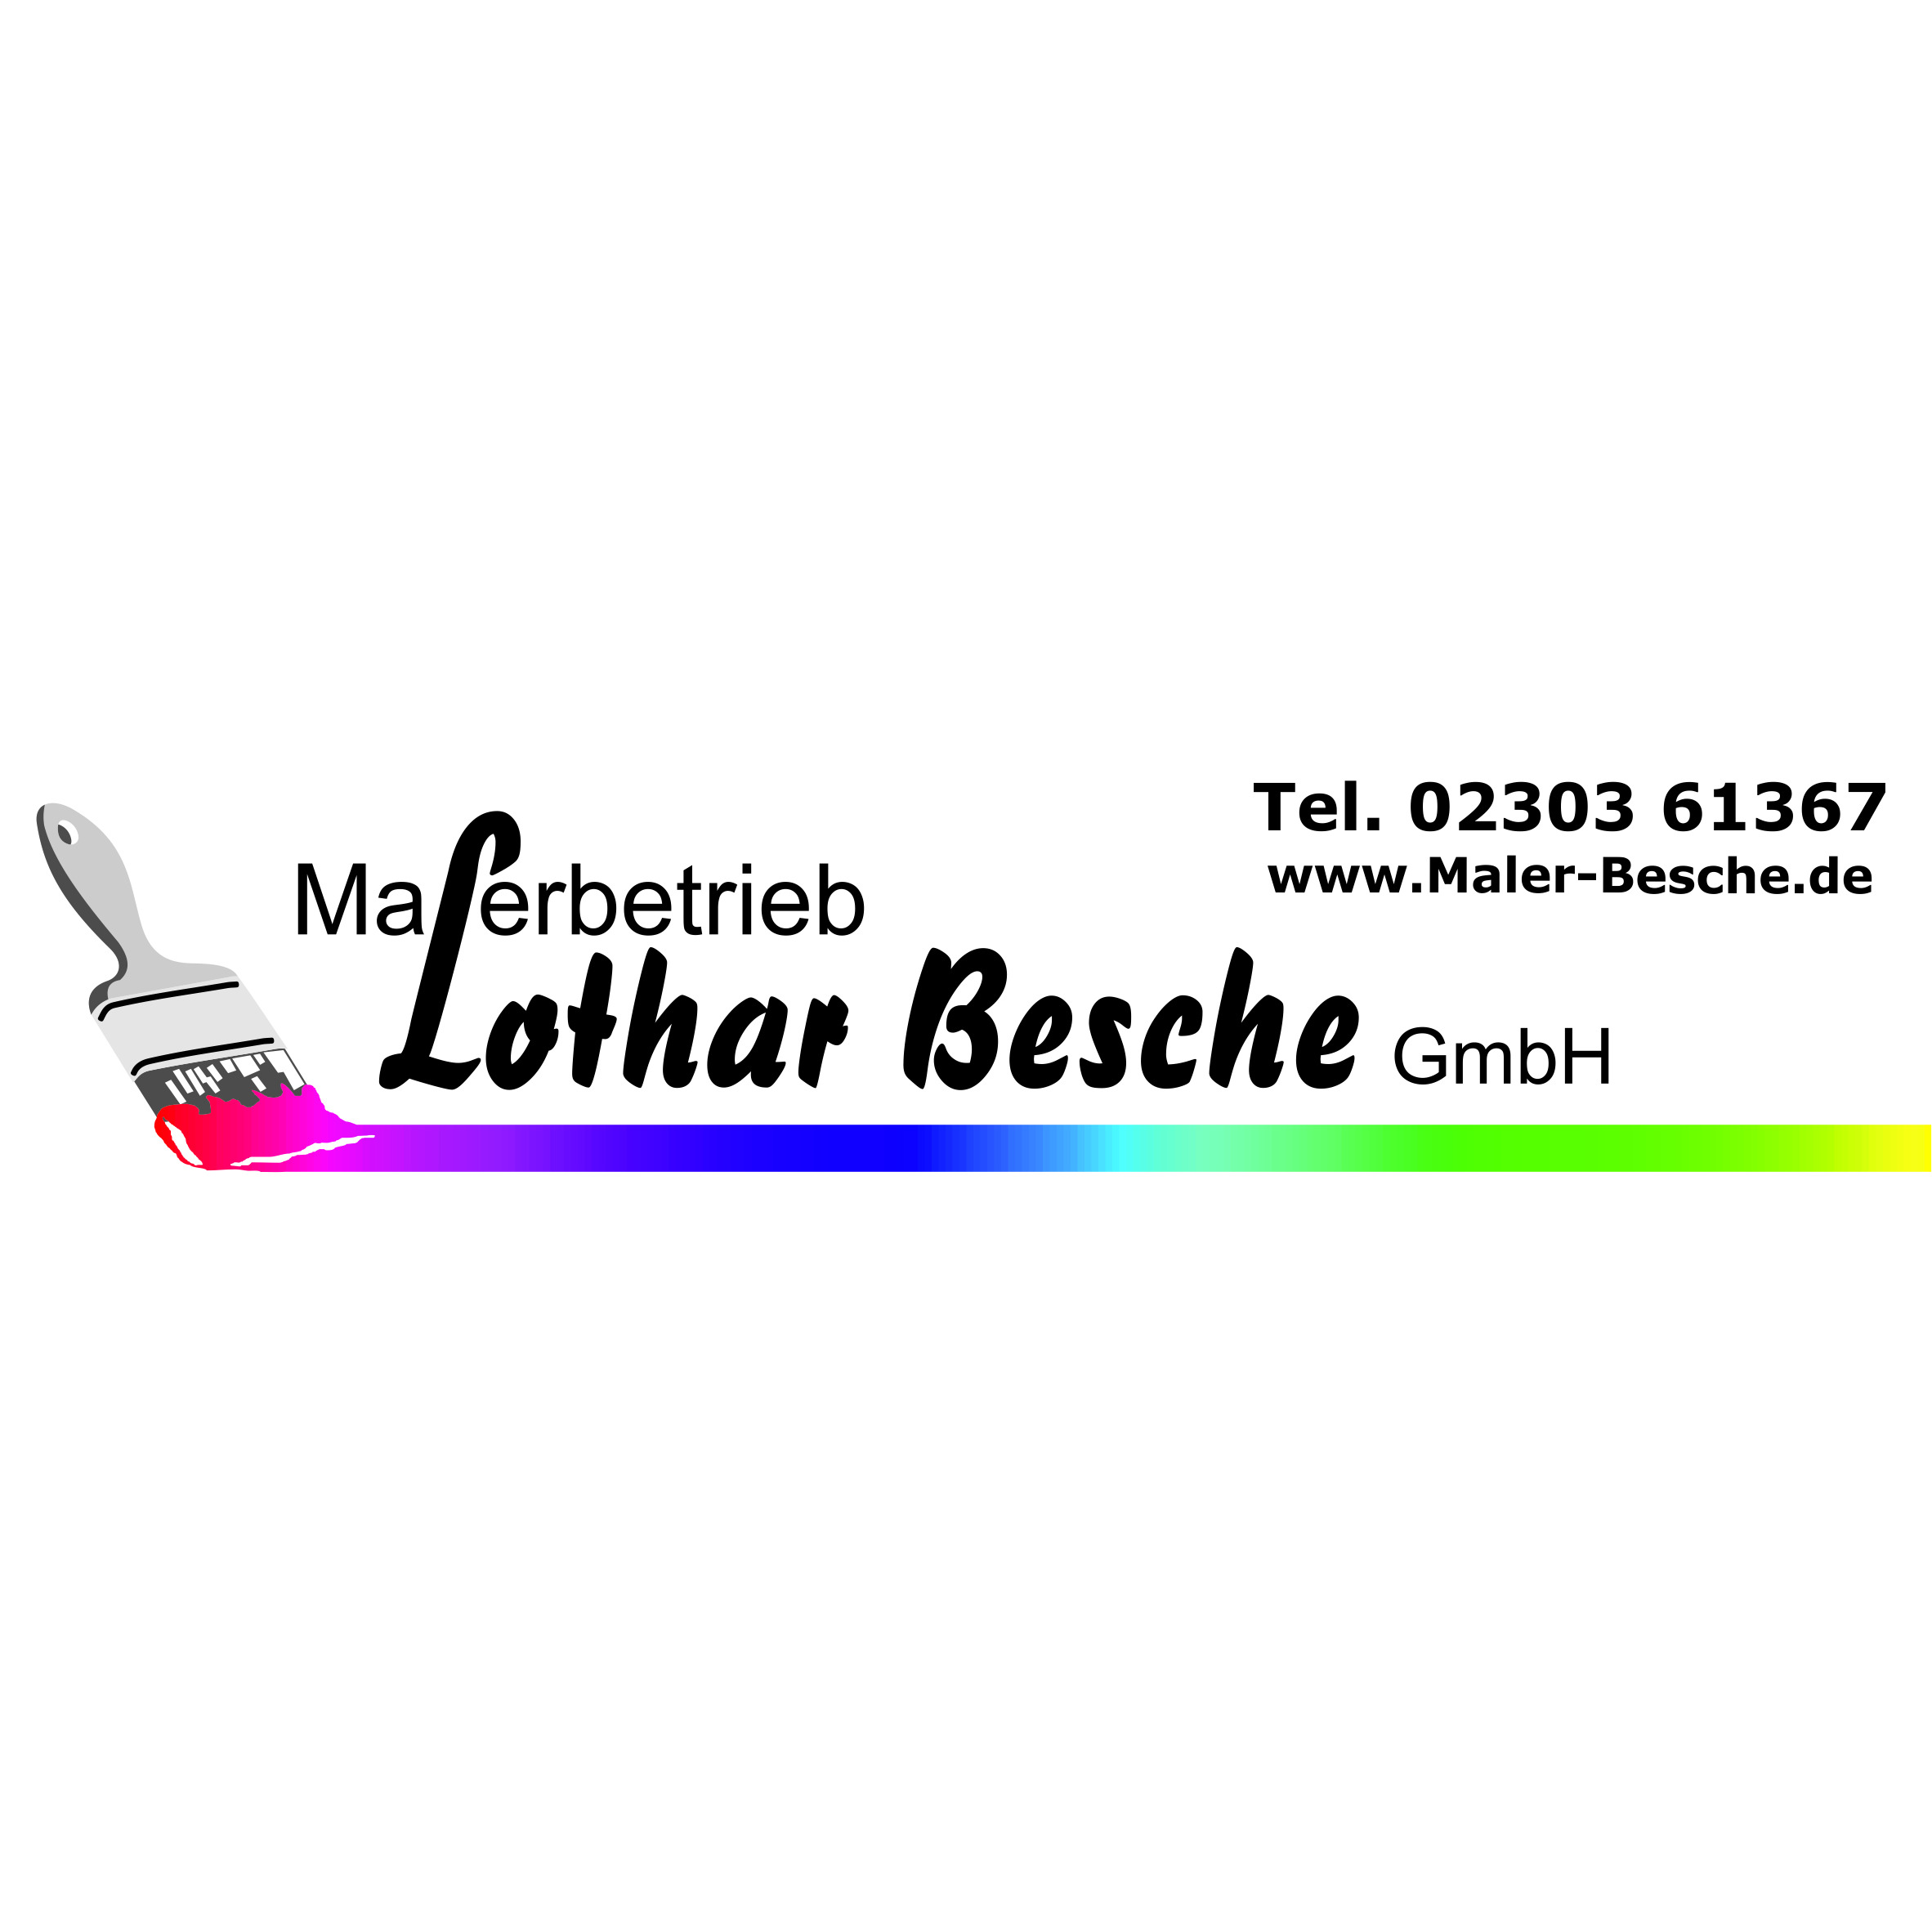 Malerbetrieb Lothar Besche GmbH in Unna - Logo